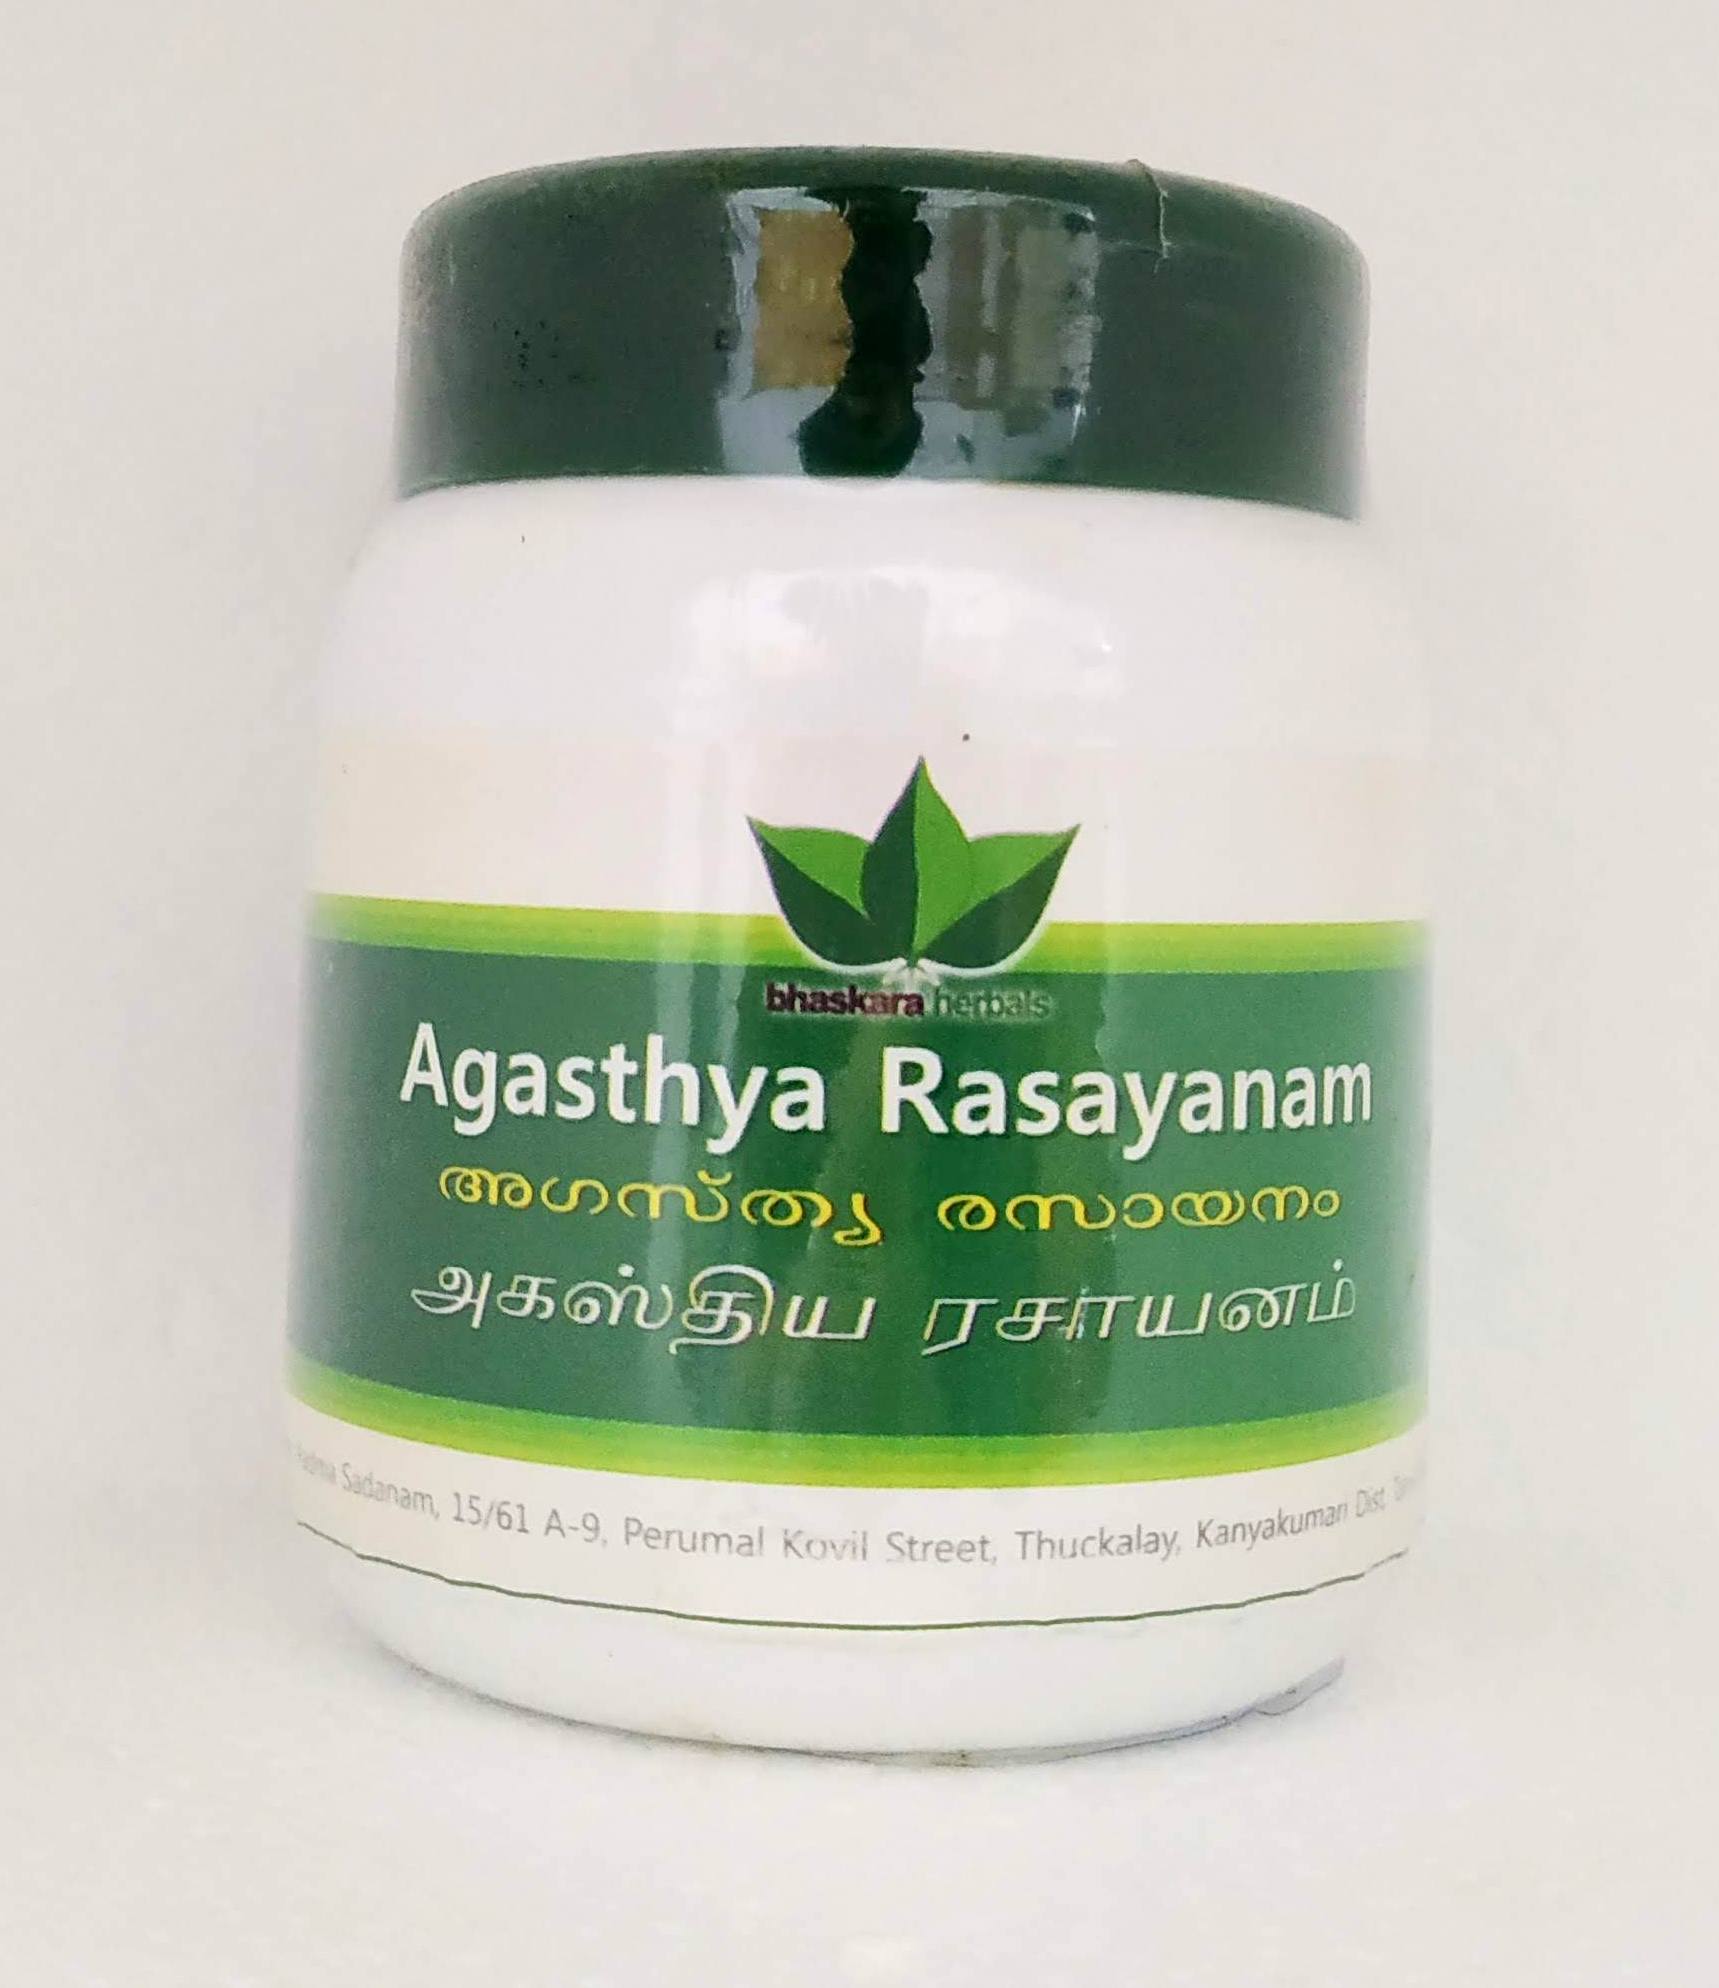 Shop Agasthya rasayanam 200gm at price 120.00 from Bhaskara Herbals Online - Ayush Care